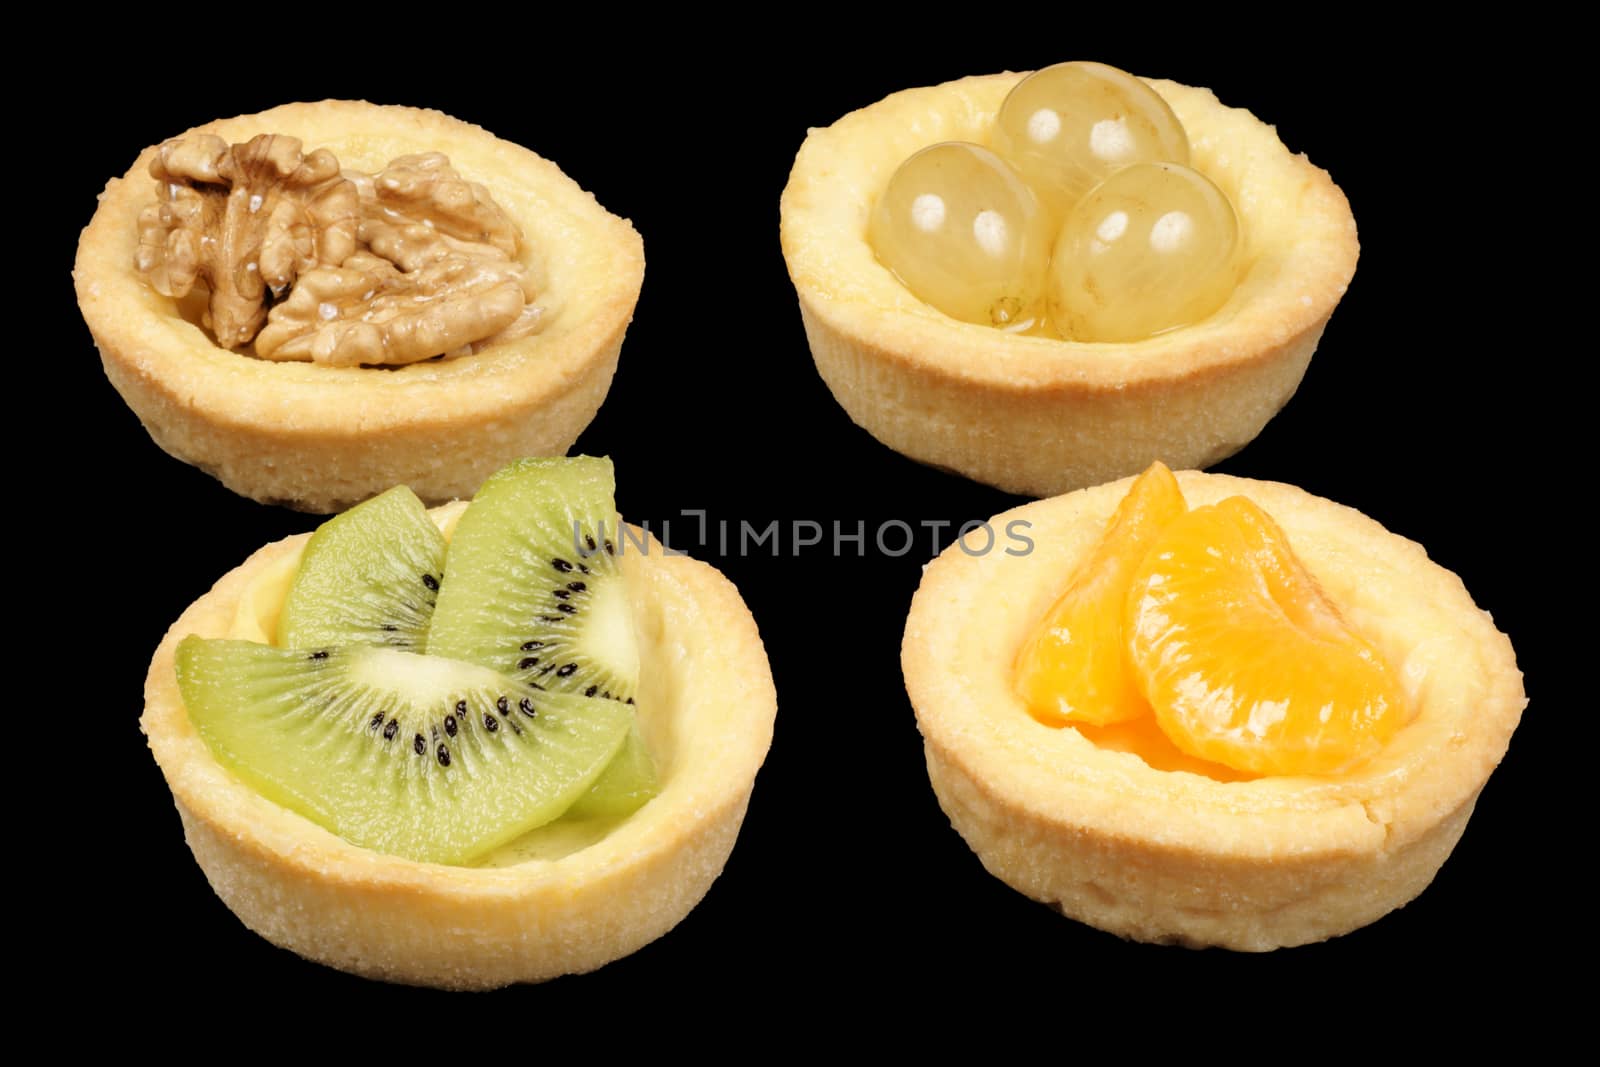 Close-up of four mini fruit tarts over black background